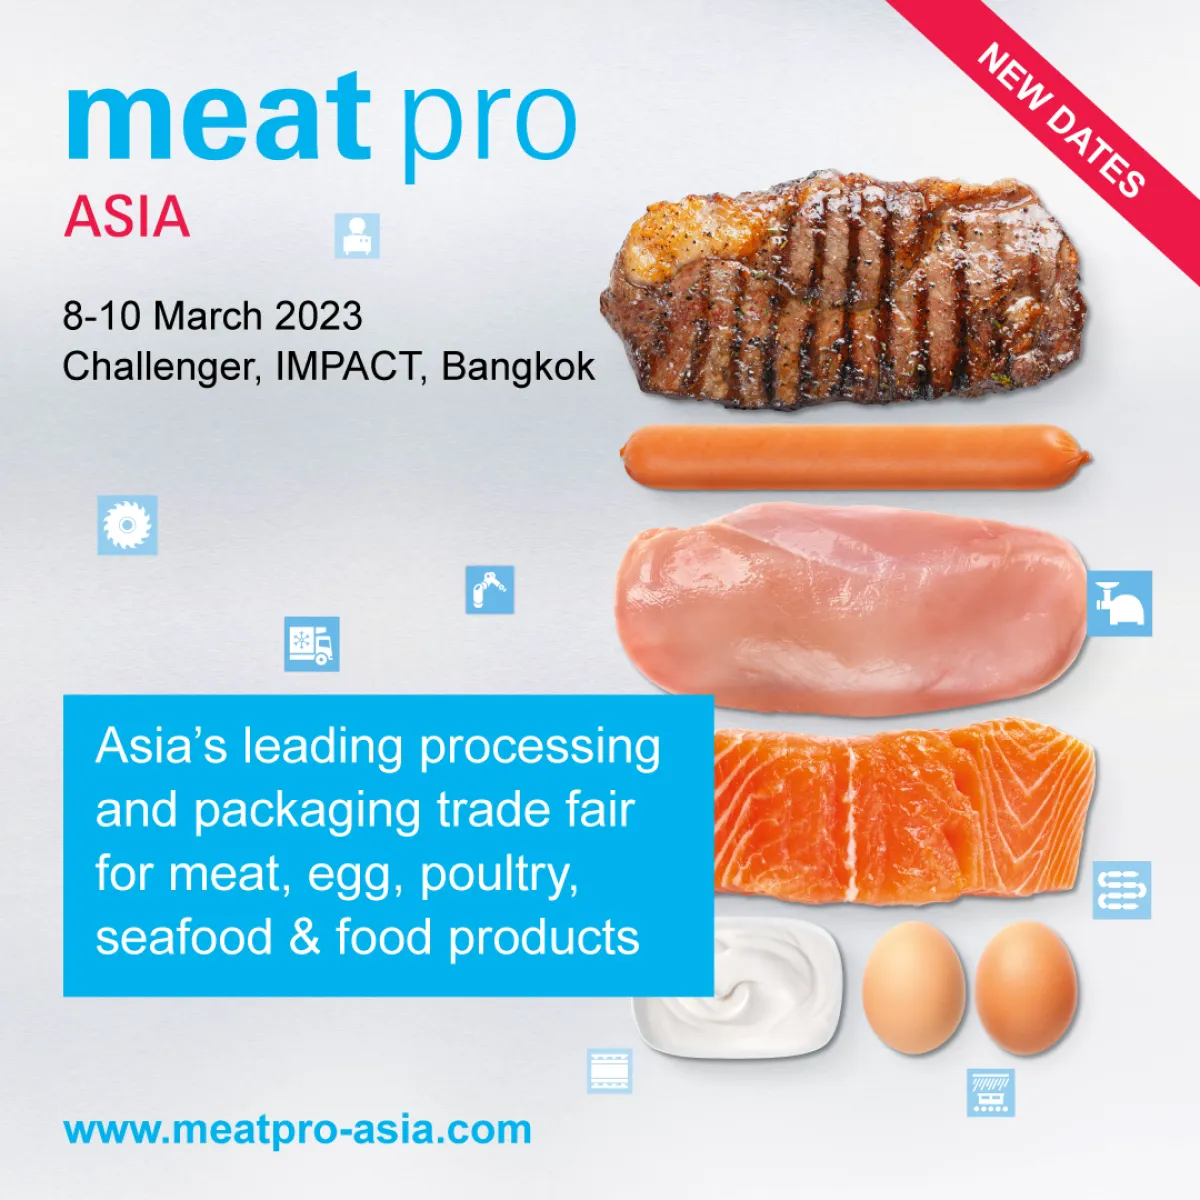 Travel calendar – Meat Pro Asia 2023 (March event calendar)